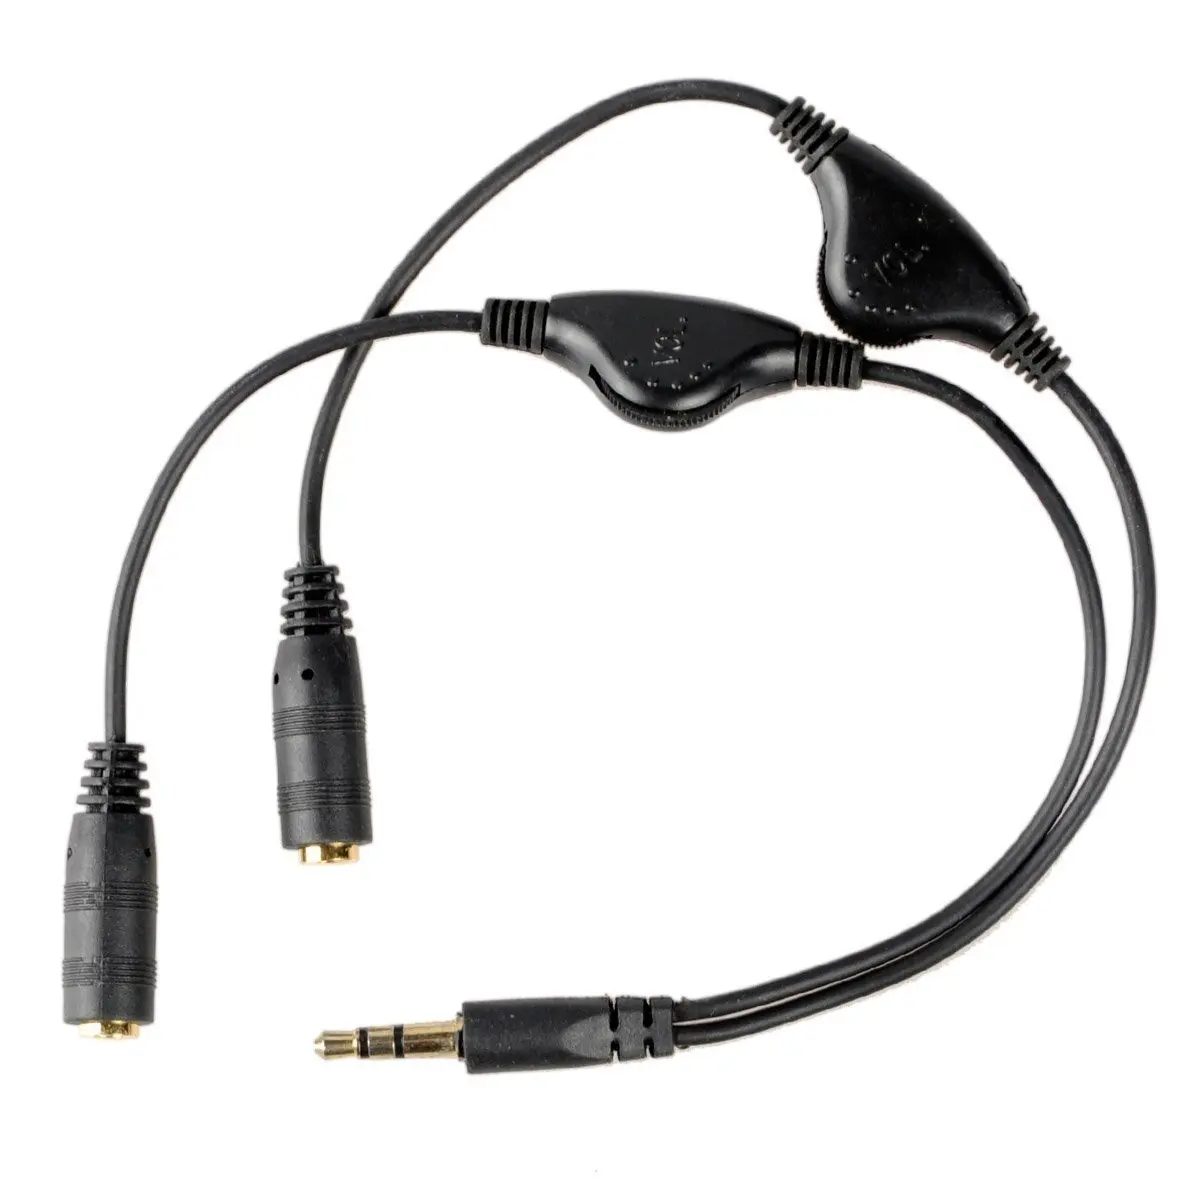 how to split headphones from dcommand